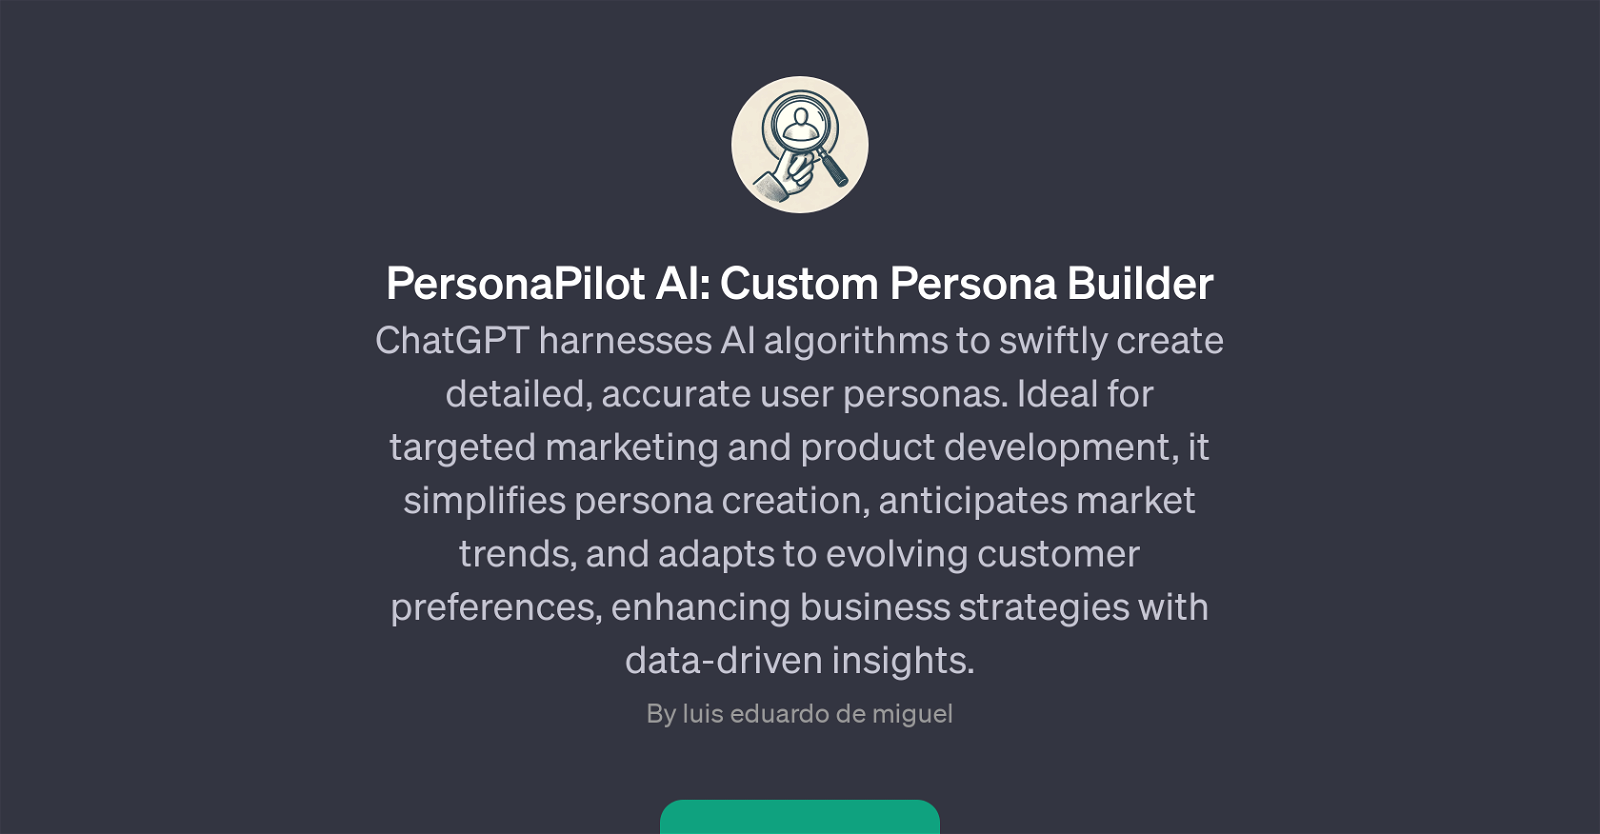 PersonaPilot AI: Custom Persona Builder website